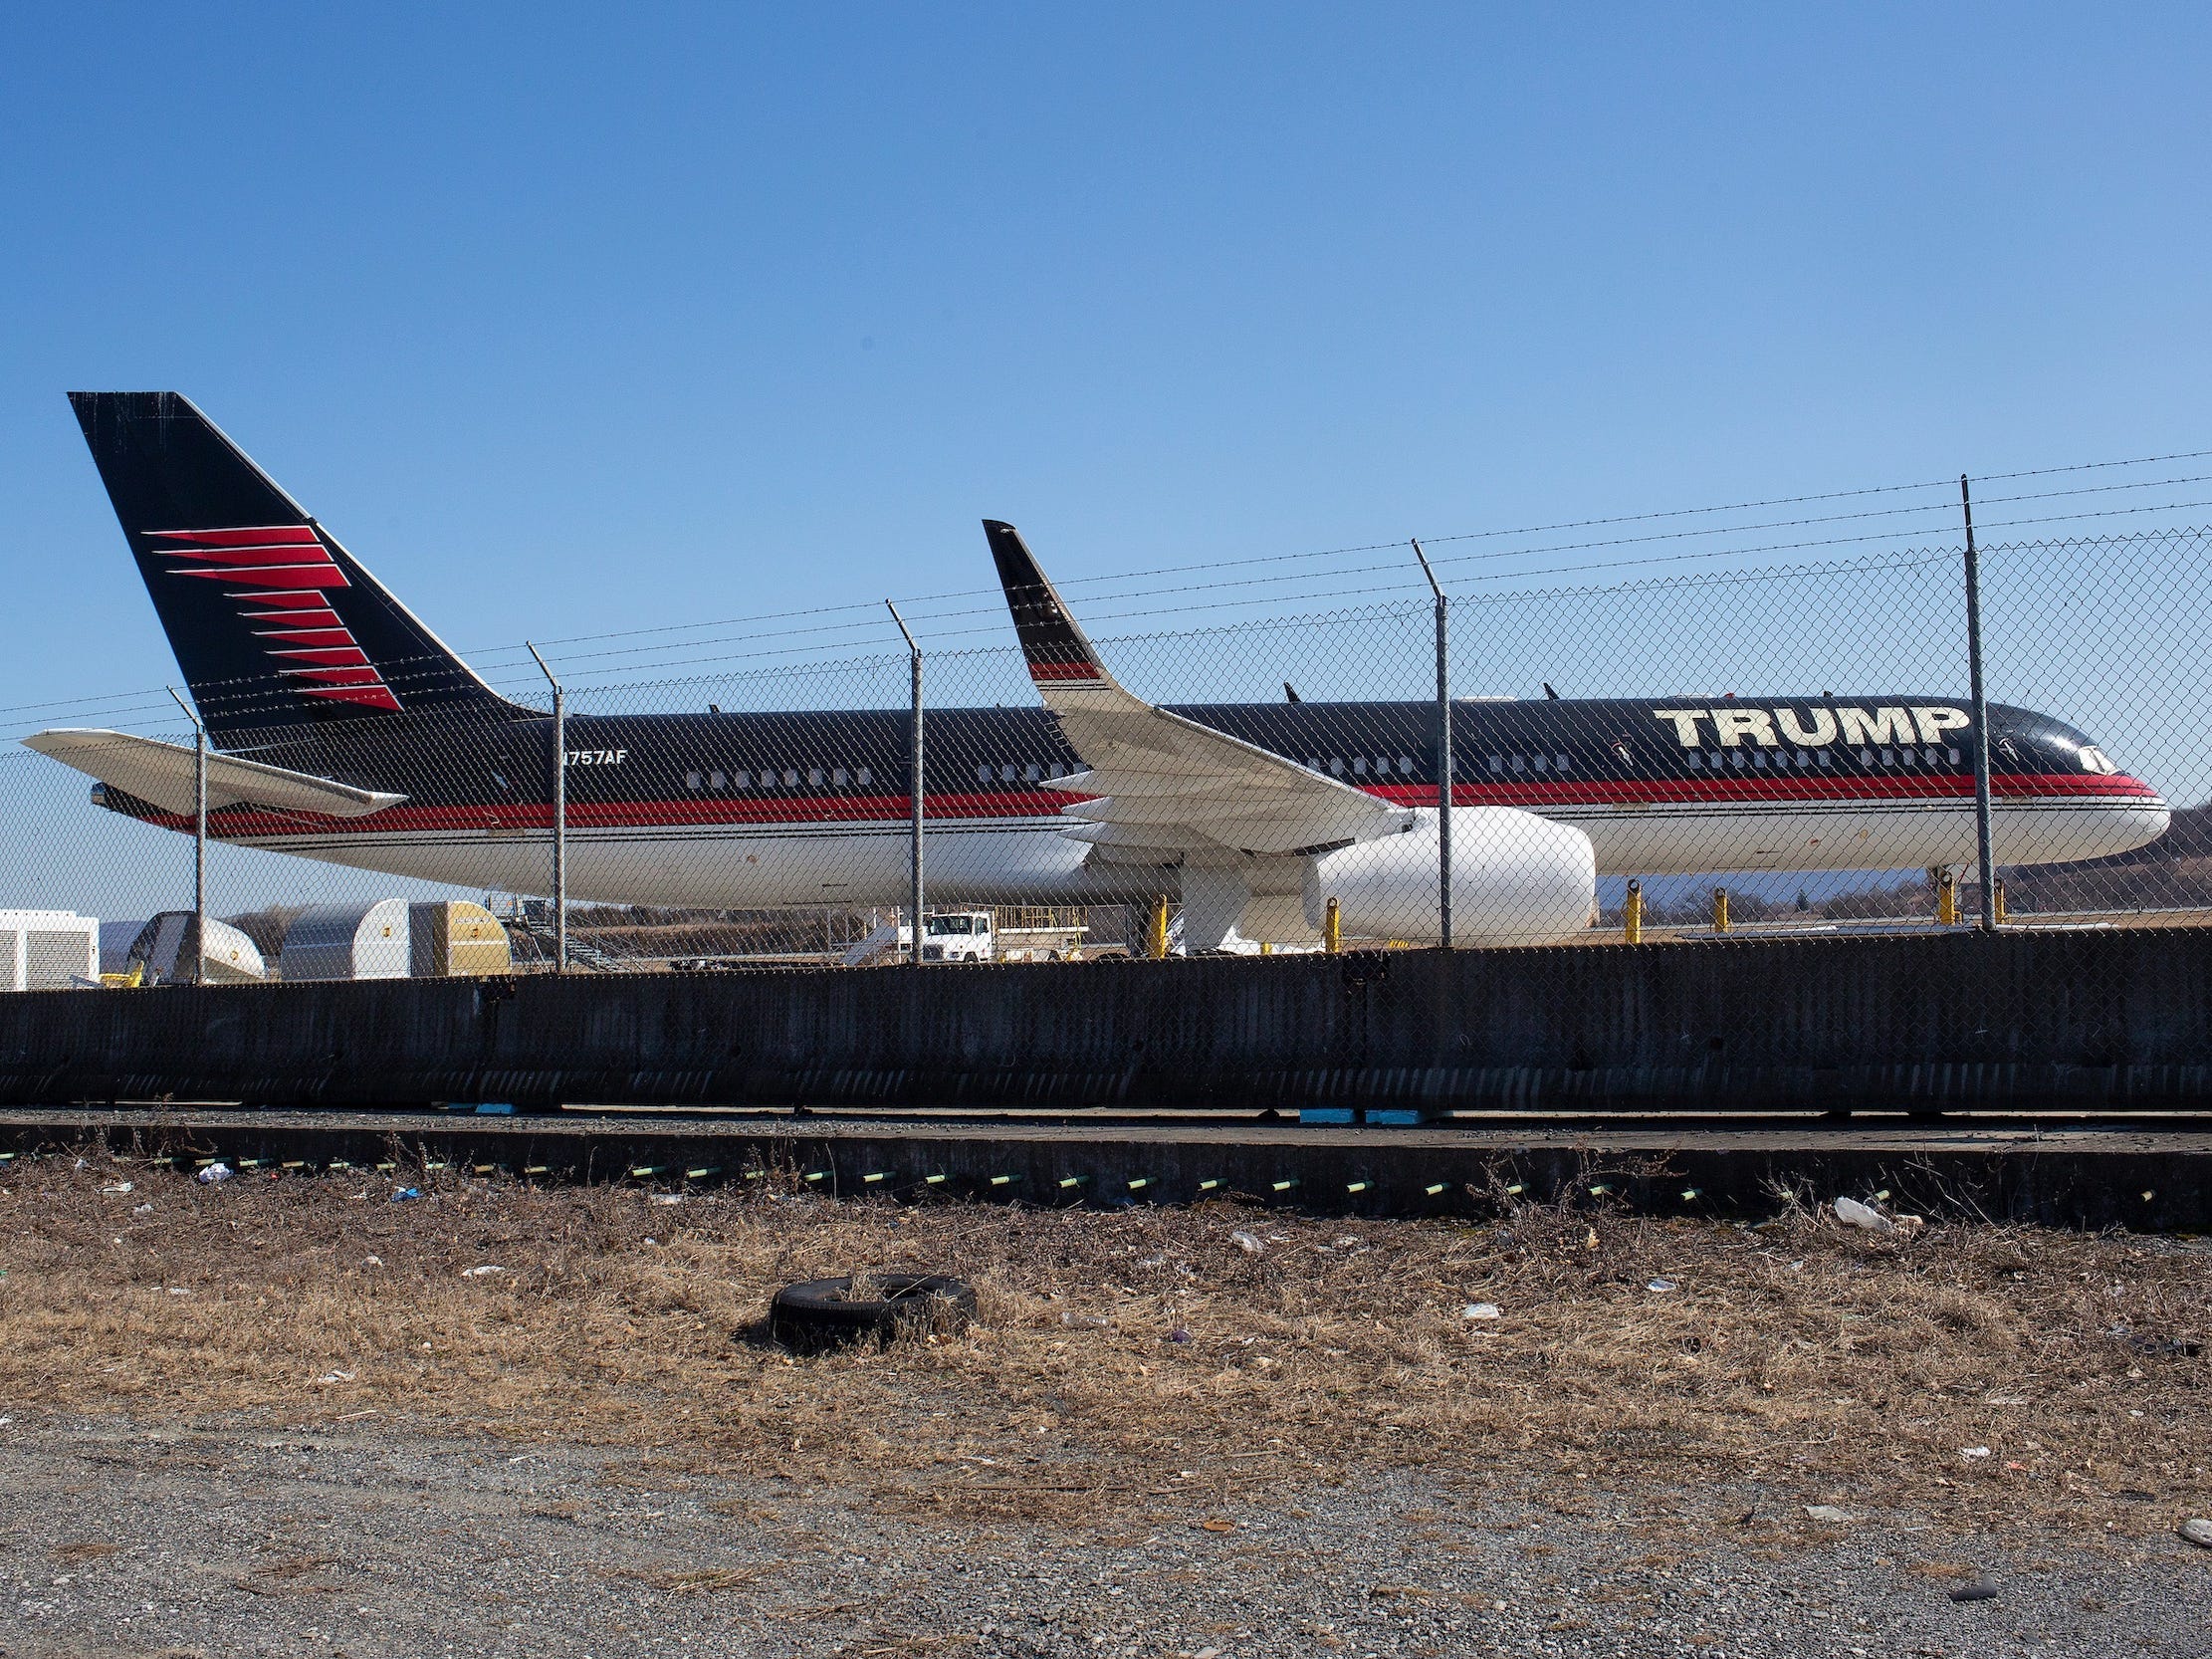 Trump's 757 parked at Stewart International Airport in New York.